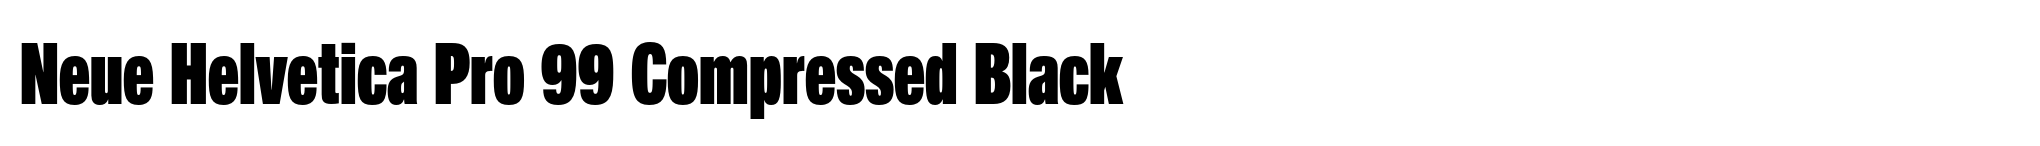 Neue Helvetica Pro 99 Compressed Black image